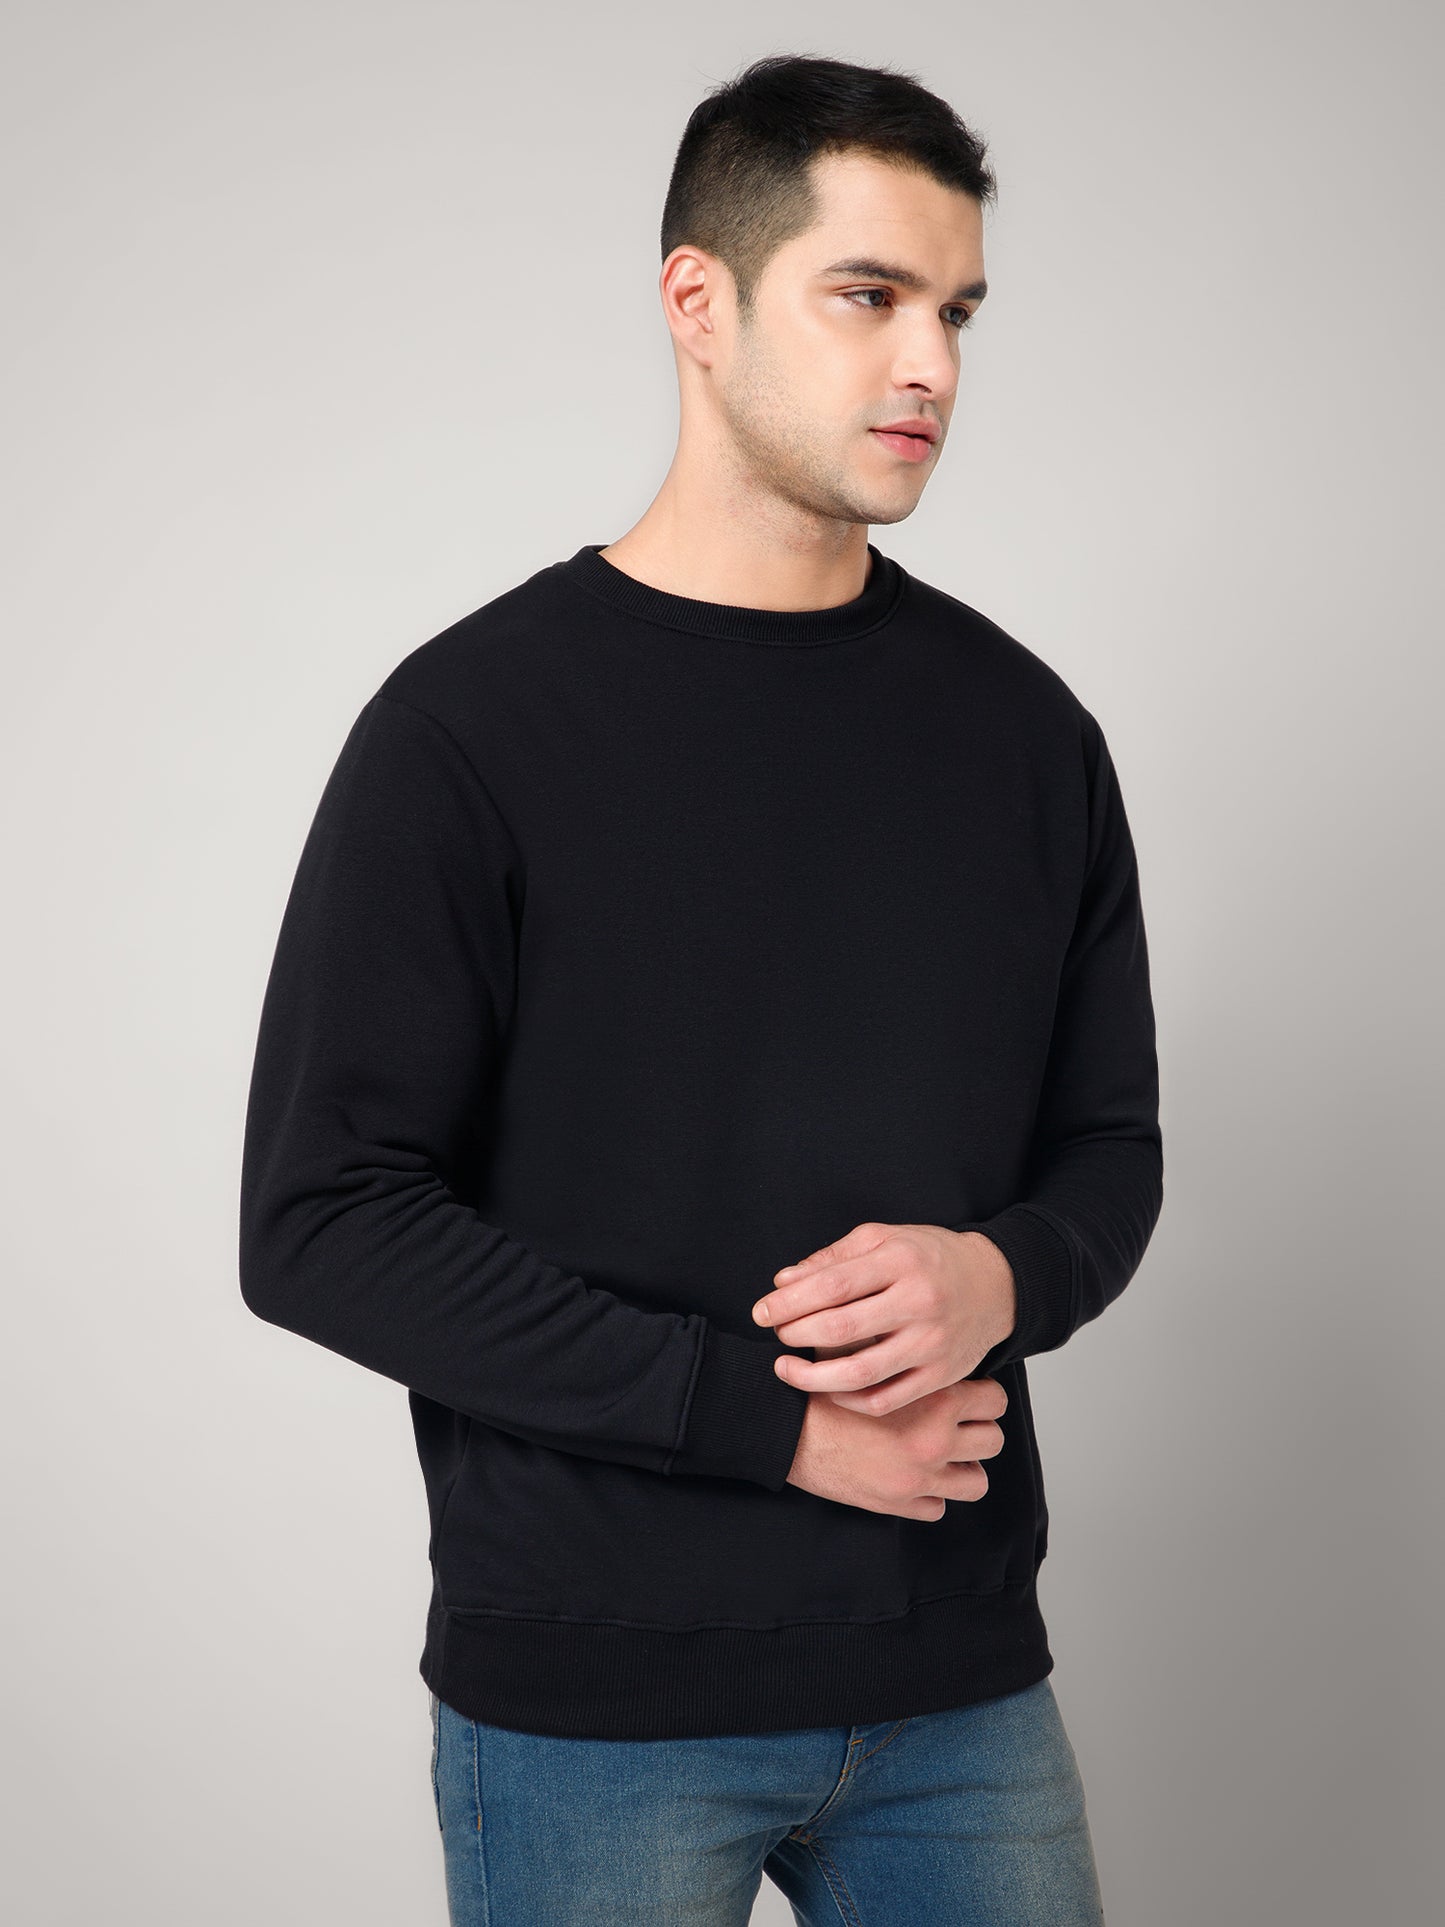 Solid Black Sweatshirt